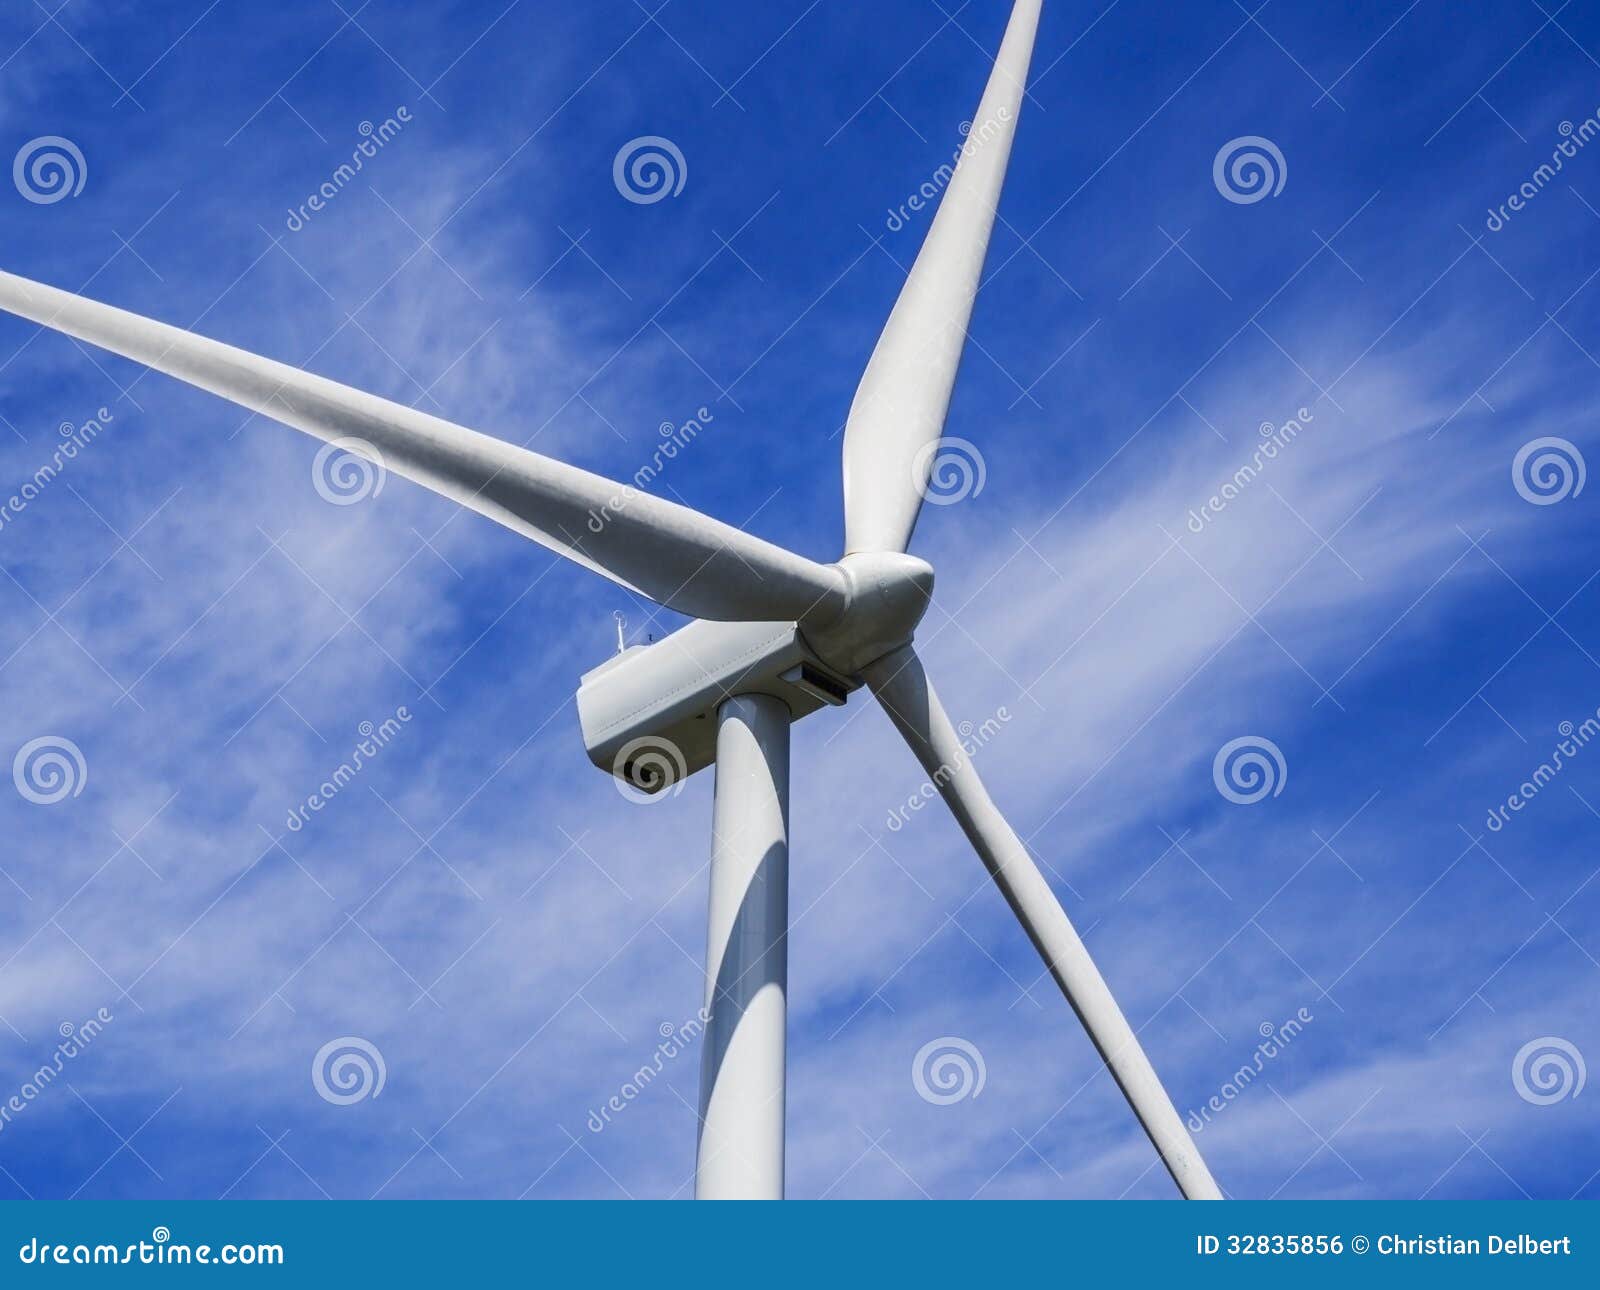 close up of wind turbine